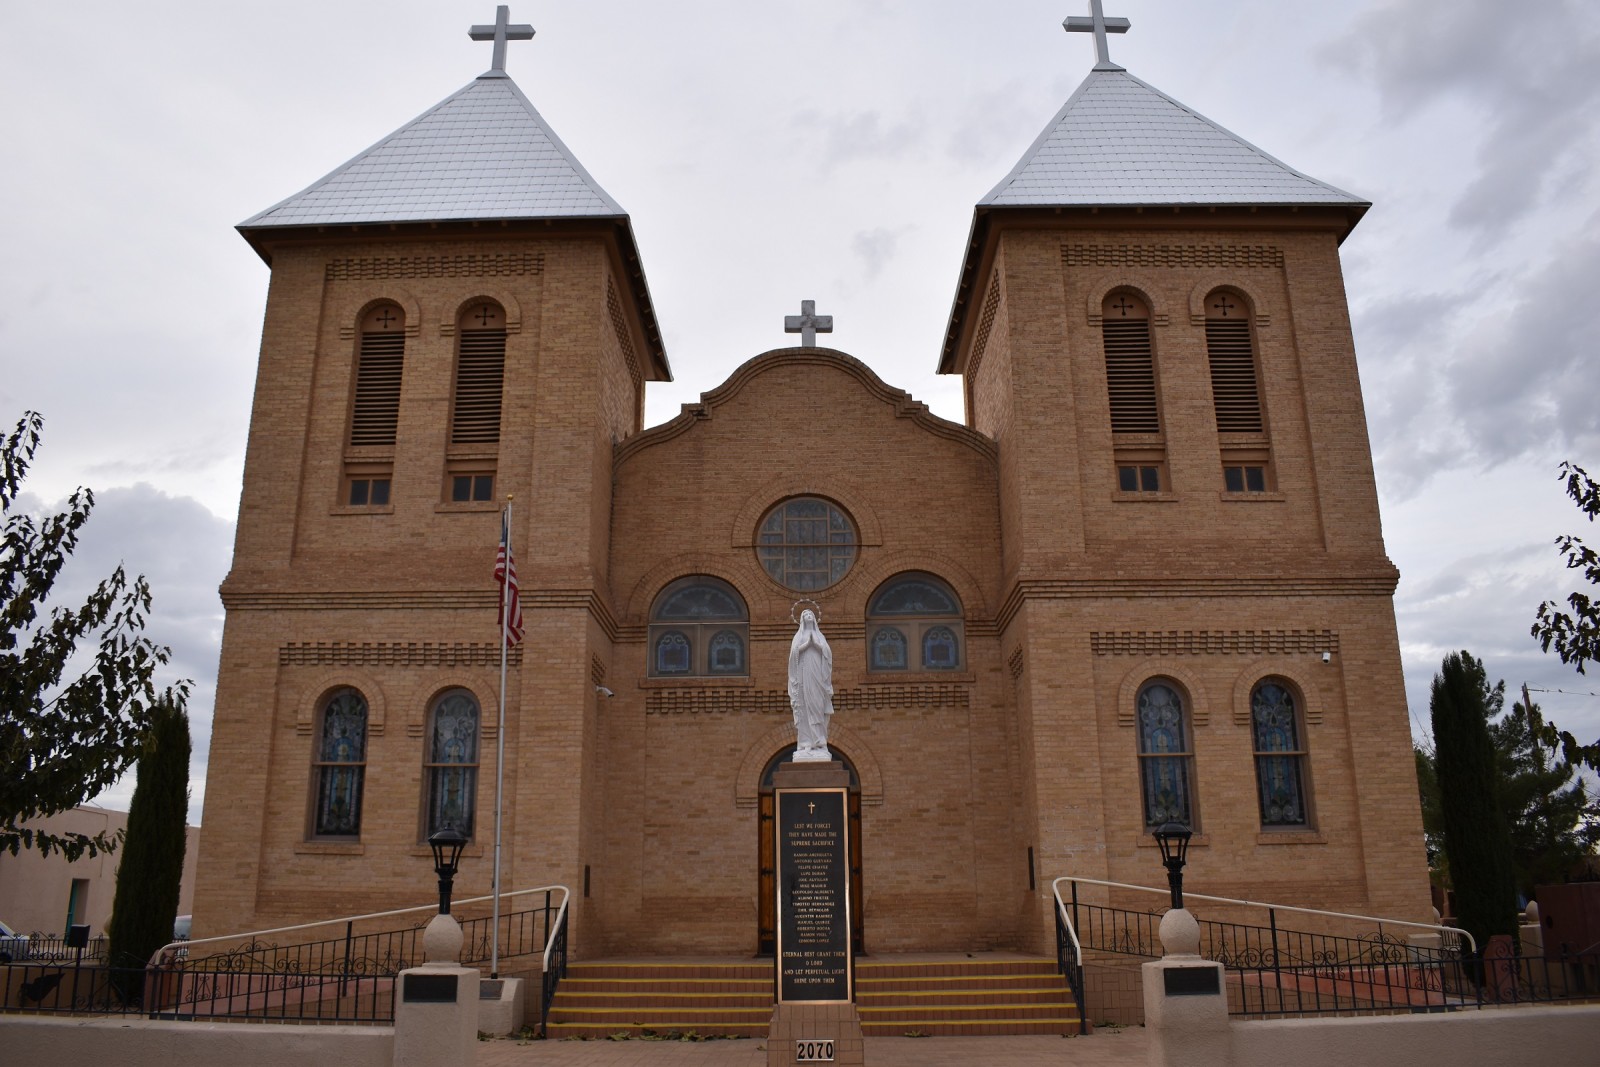 The Basilica of San Albino on the north end of the Old Mesilla Plaza near the Taylor-Mesilla Historic Property.